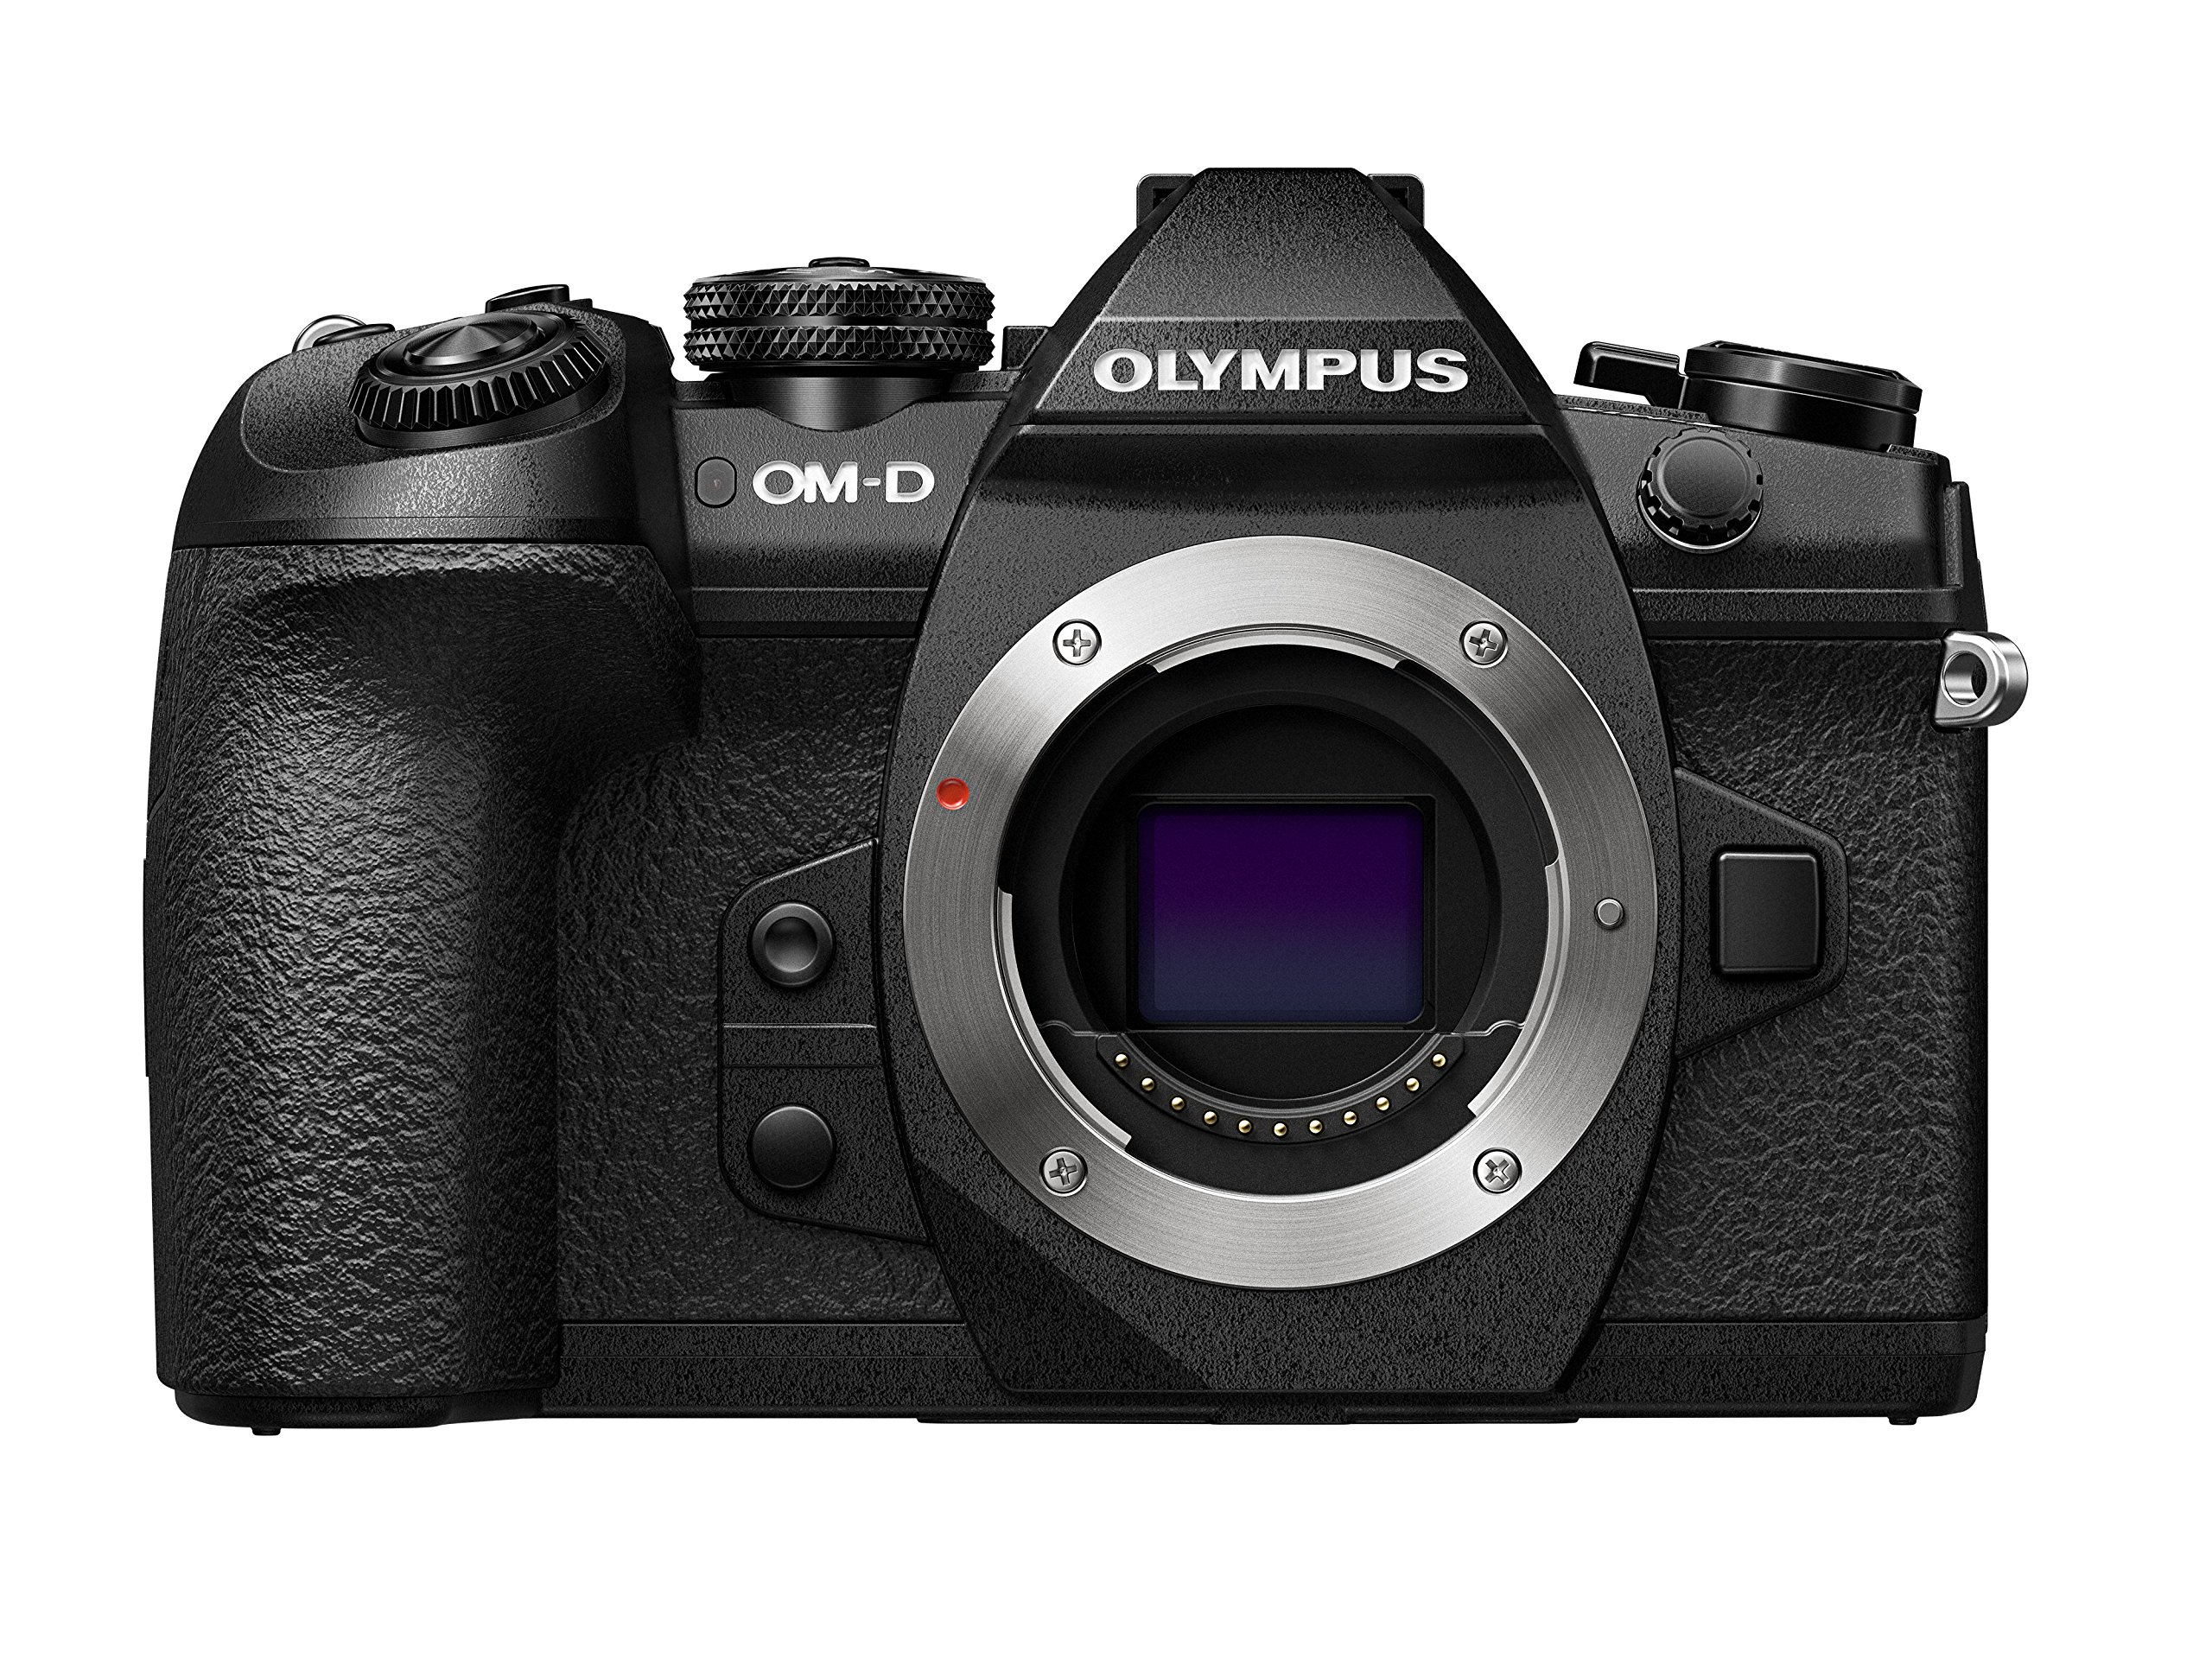 Olympus OM-D E-M1 Mark II Black Body with M.Zuiko Digital 12-200mm F3.5-6.3 Lens Kit